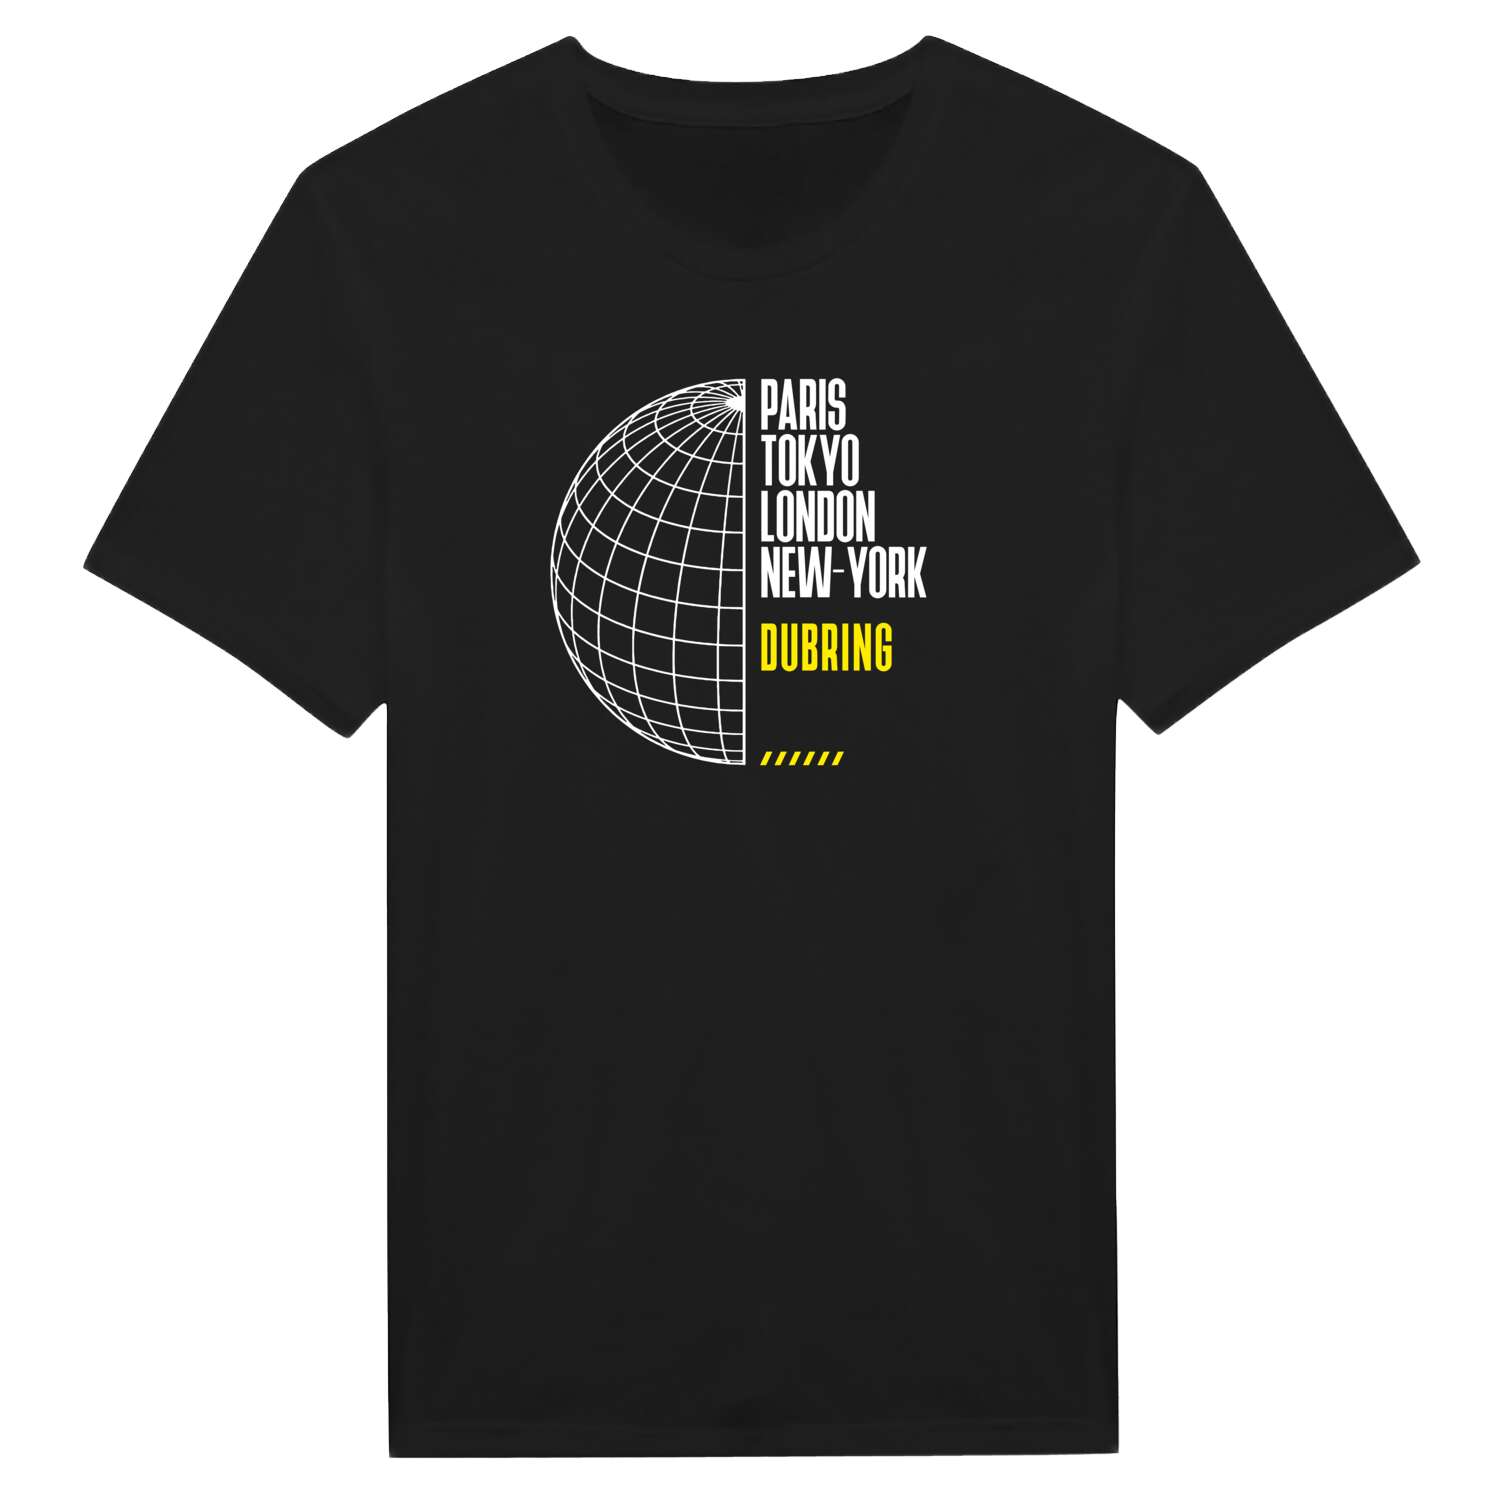 Dubring T-Shirt »Paris Tokyo London«